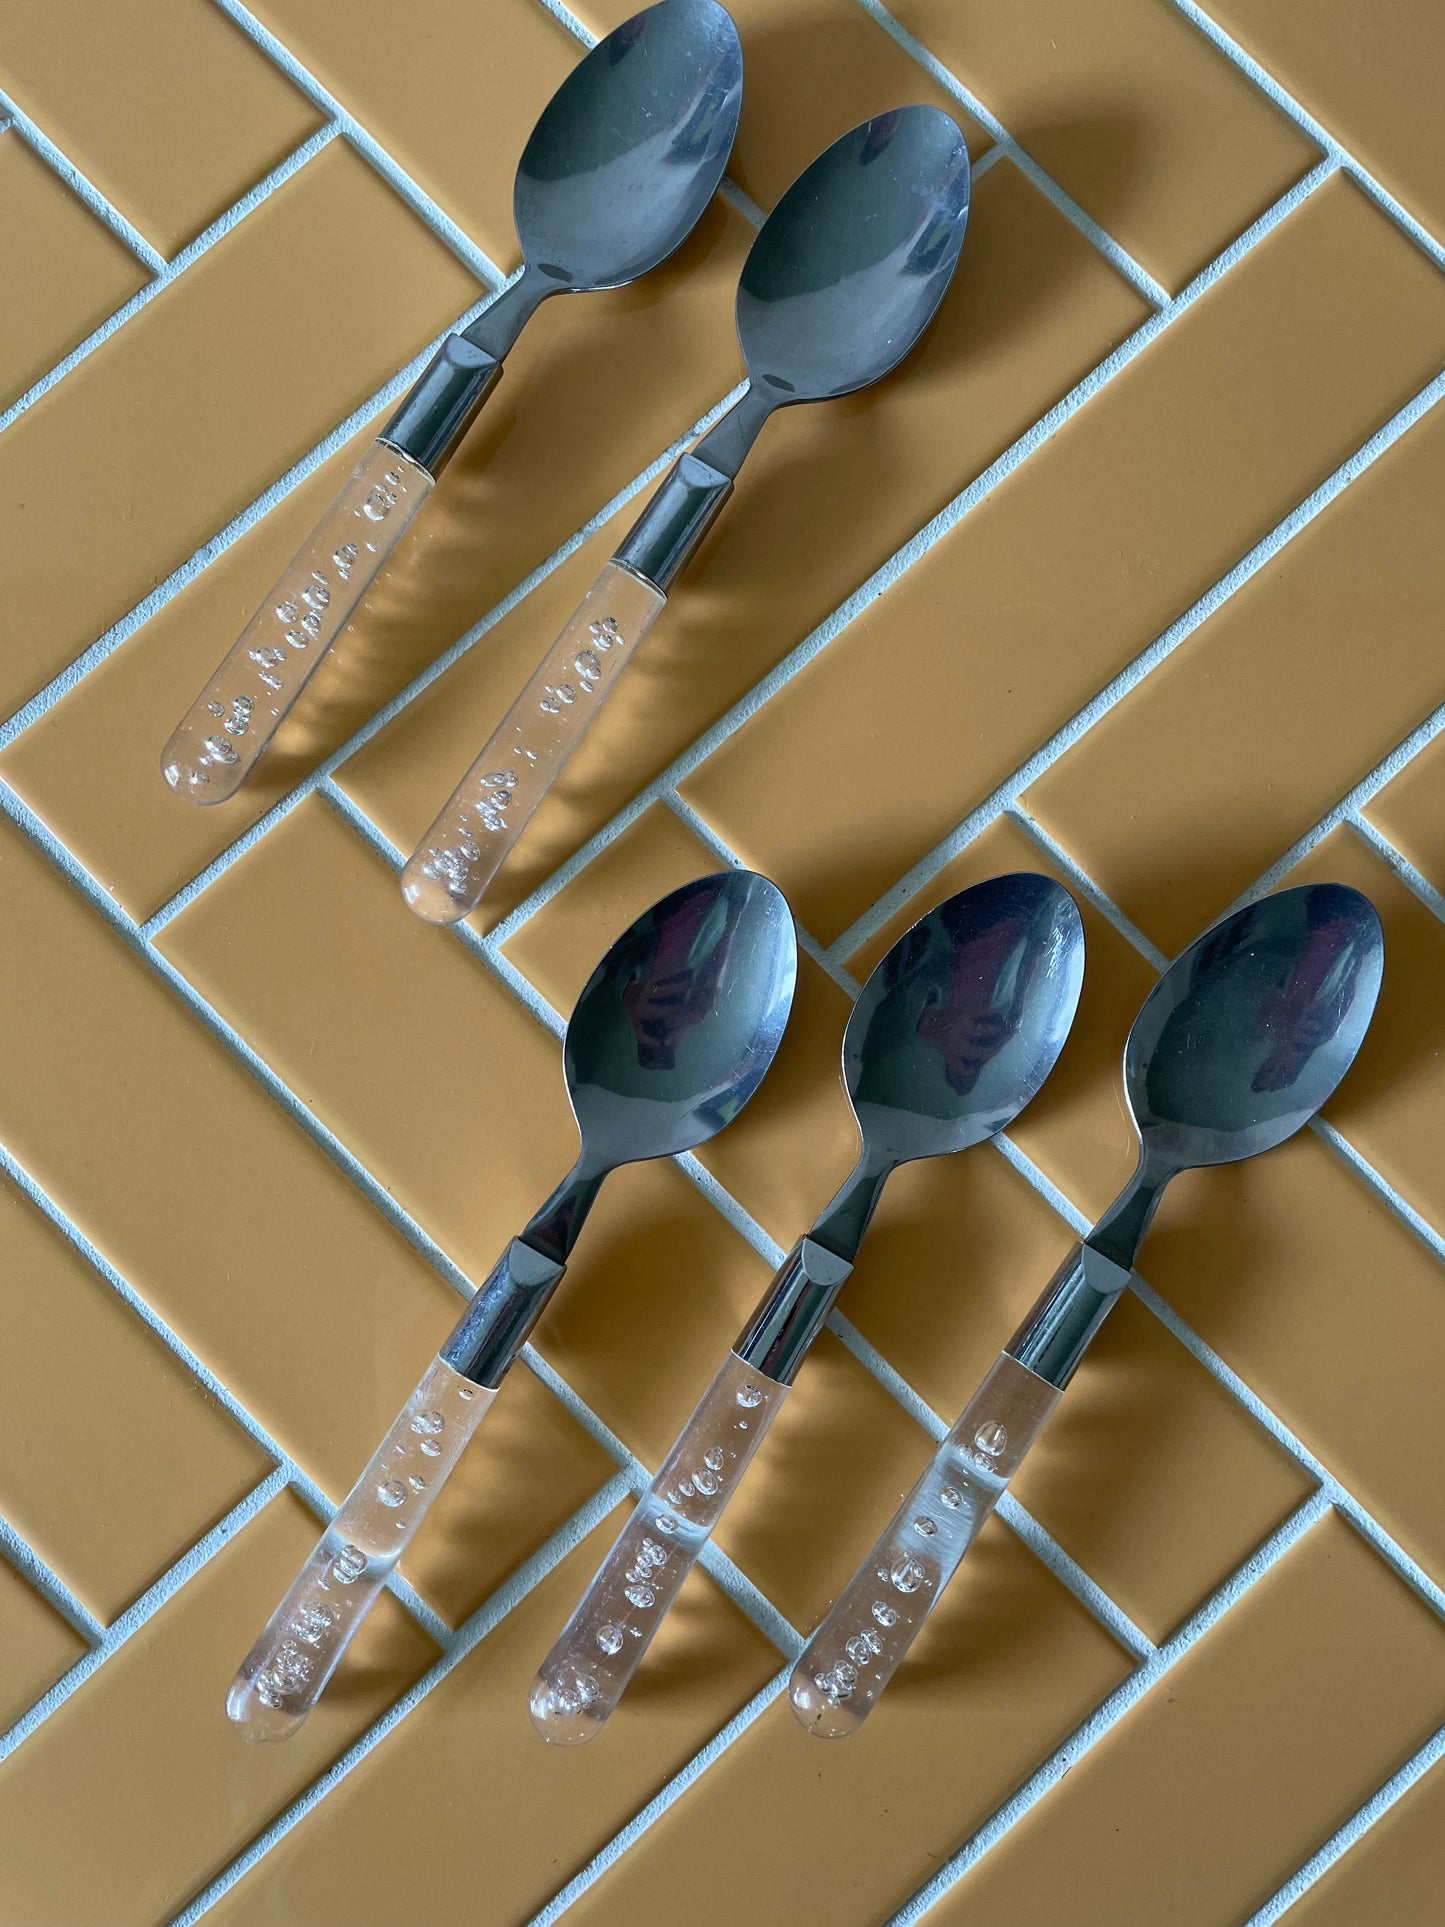 Bubble spoons - clear plastic